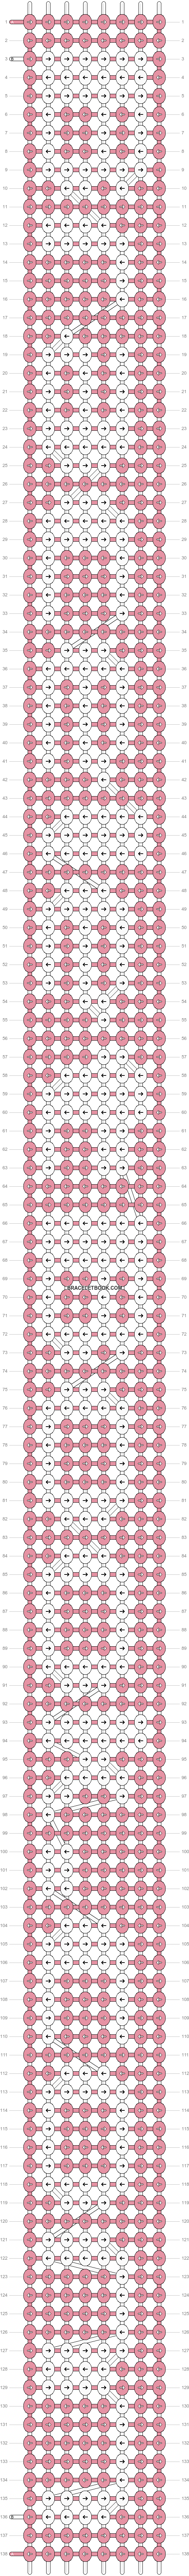 Alpha pattern #510 variation #125323 pattern